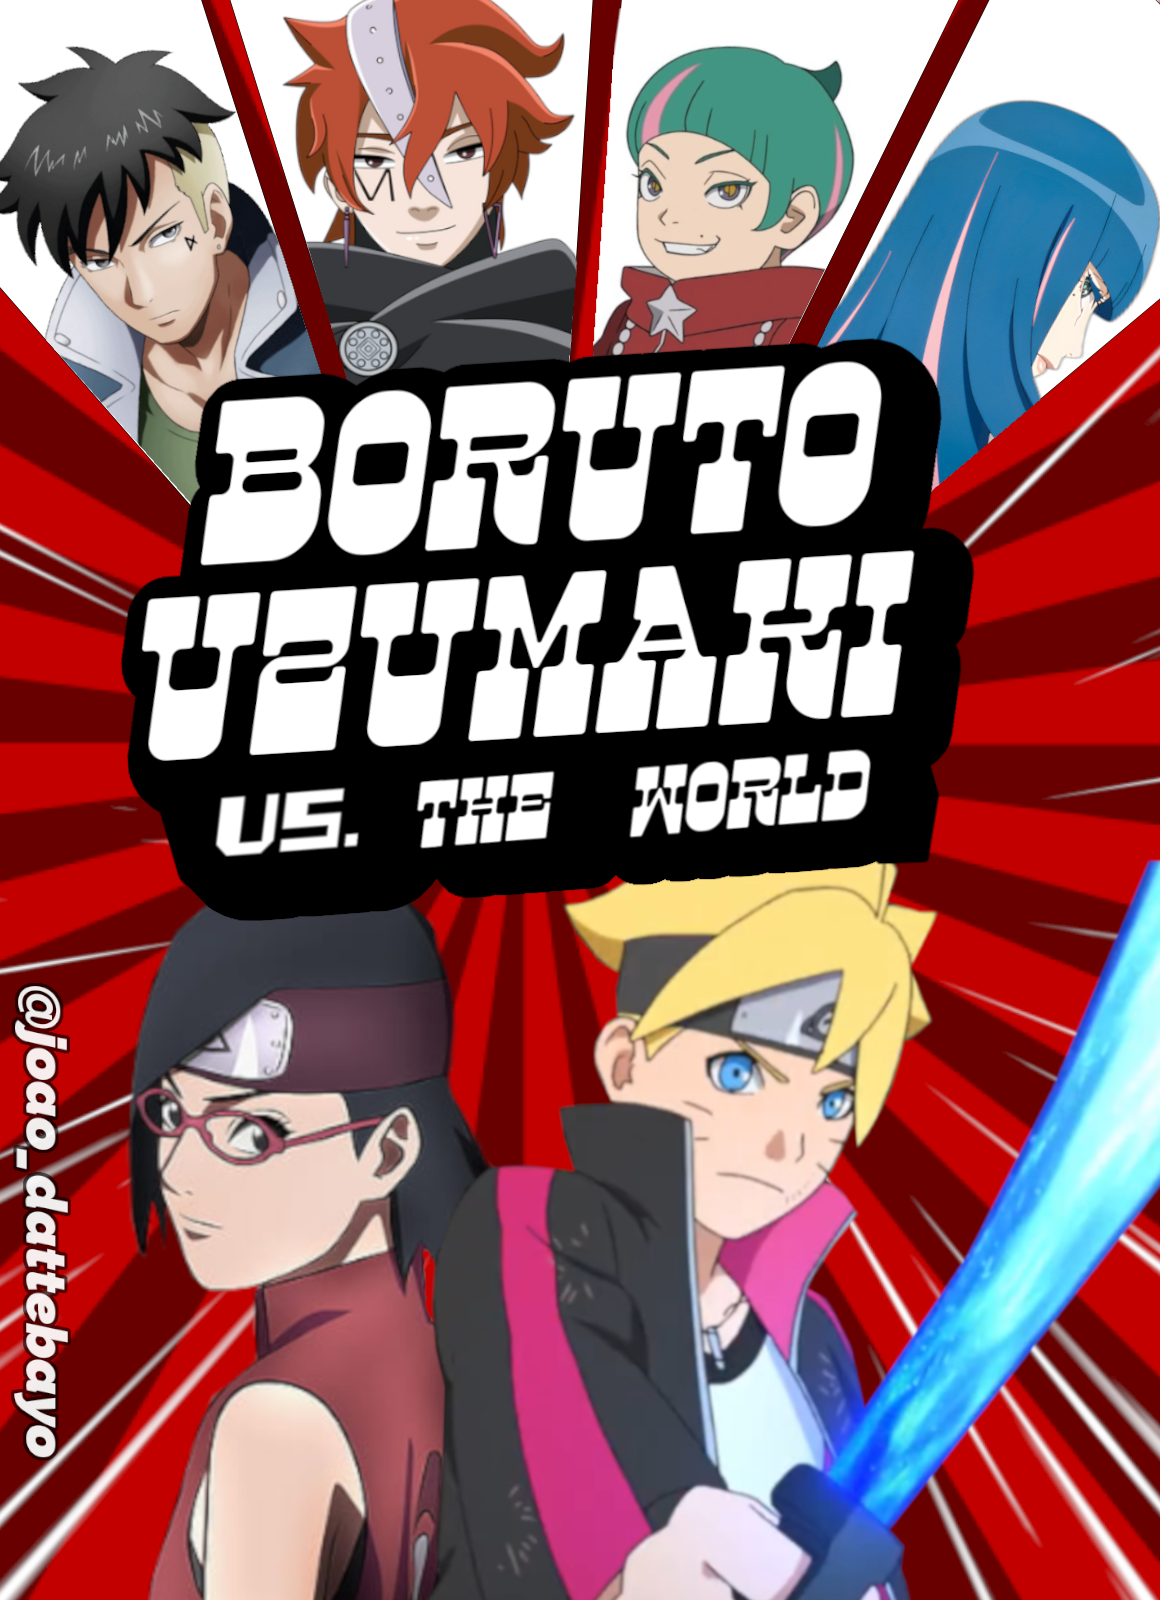 BORUTO (Naruto Next Generations) vs BORUTO THE MOVIE 